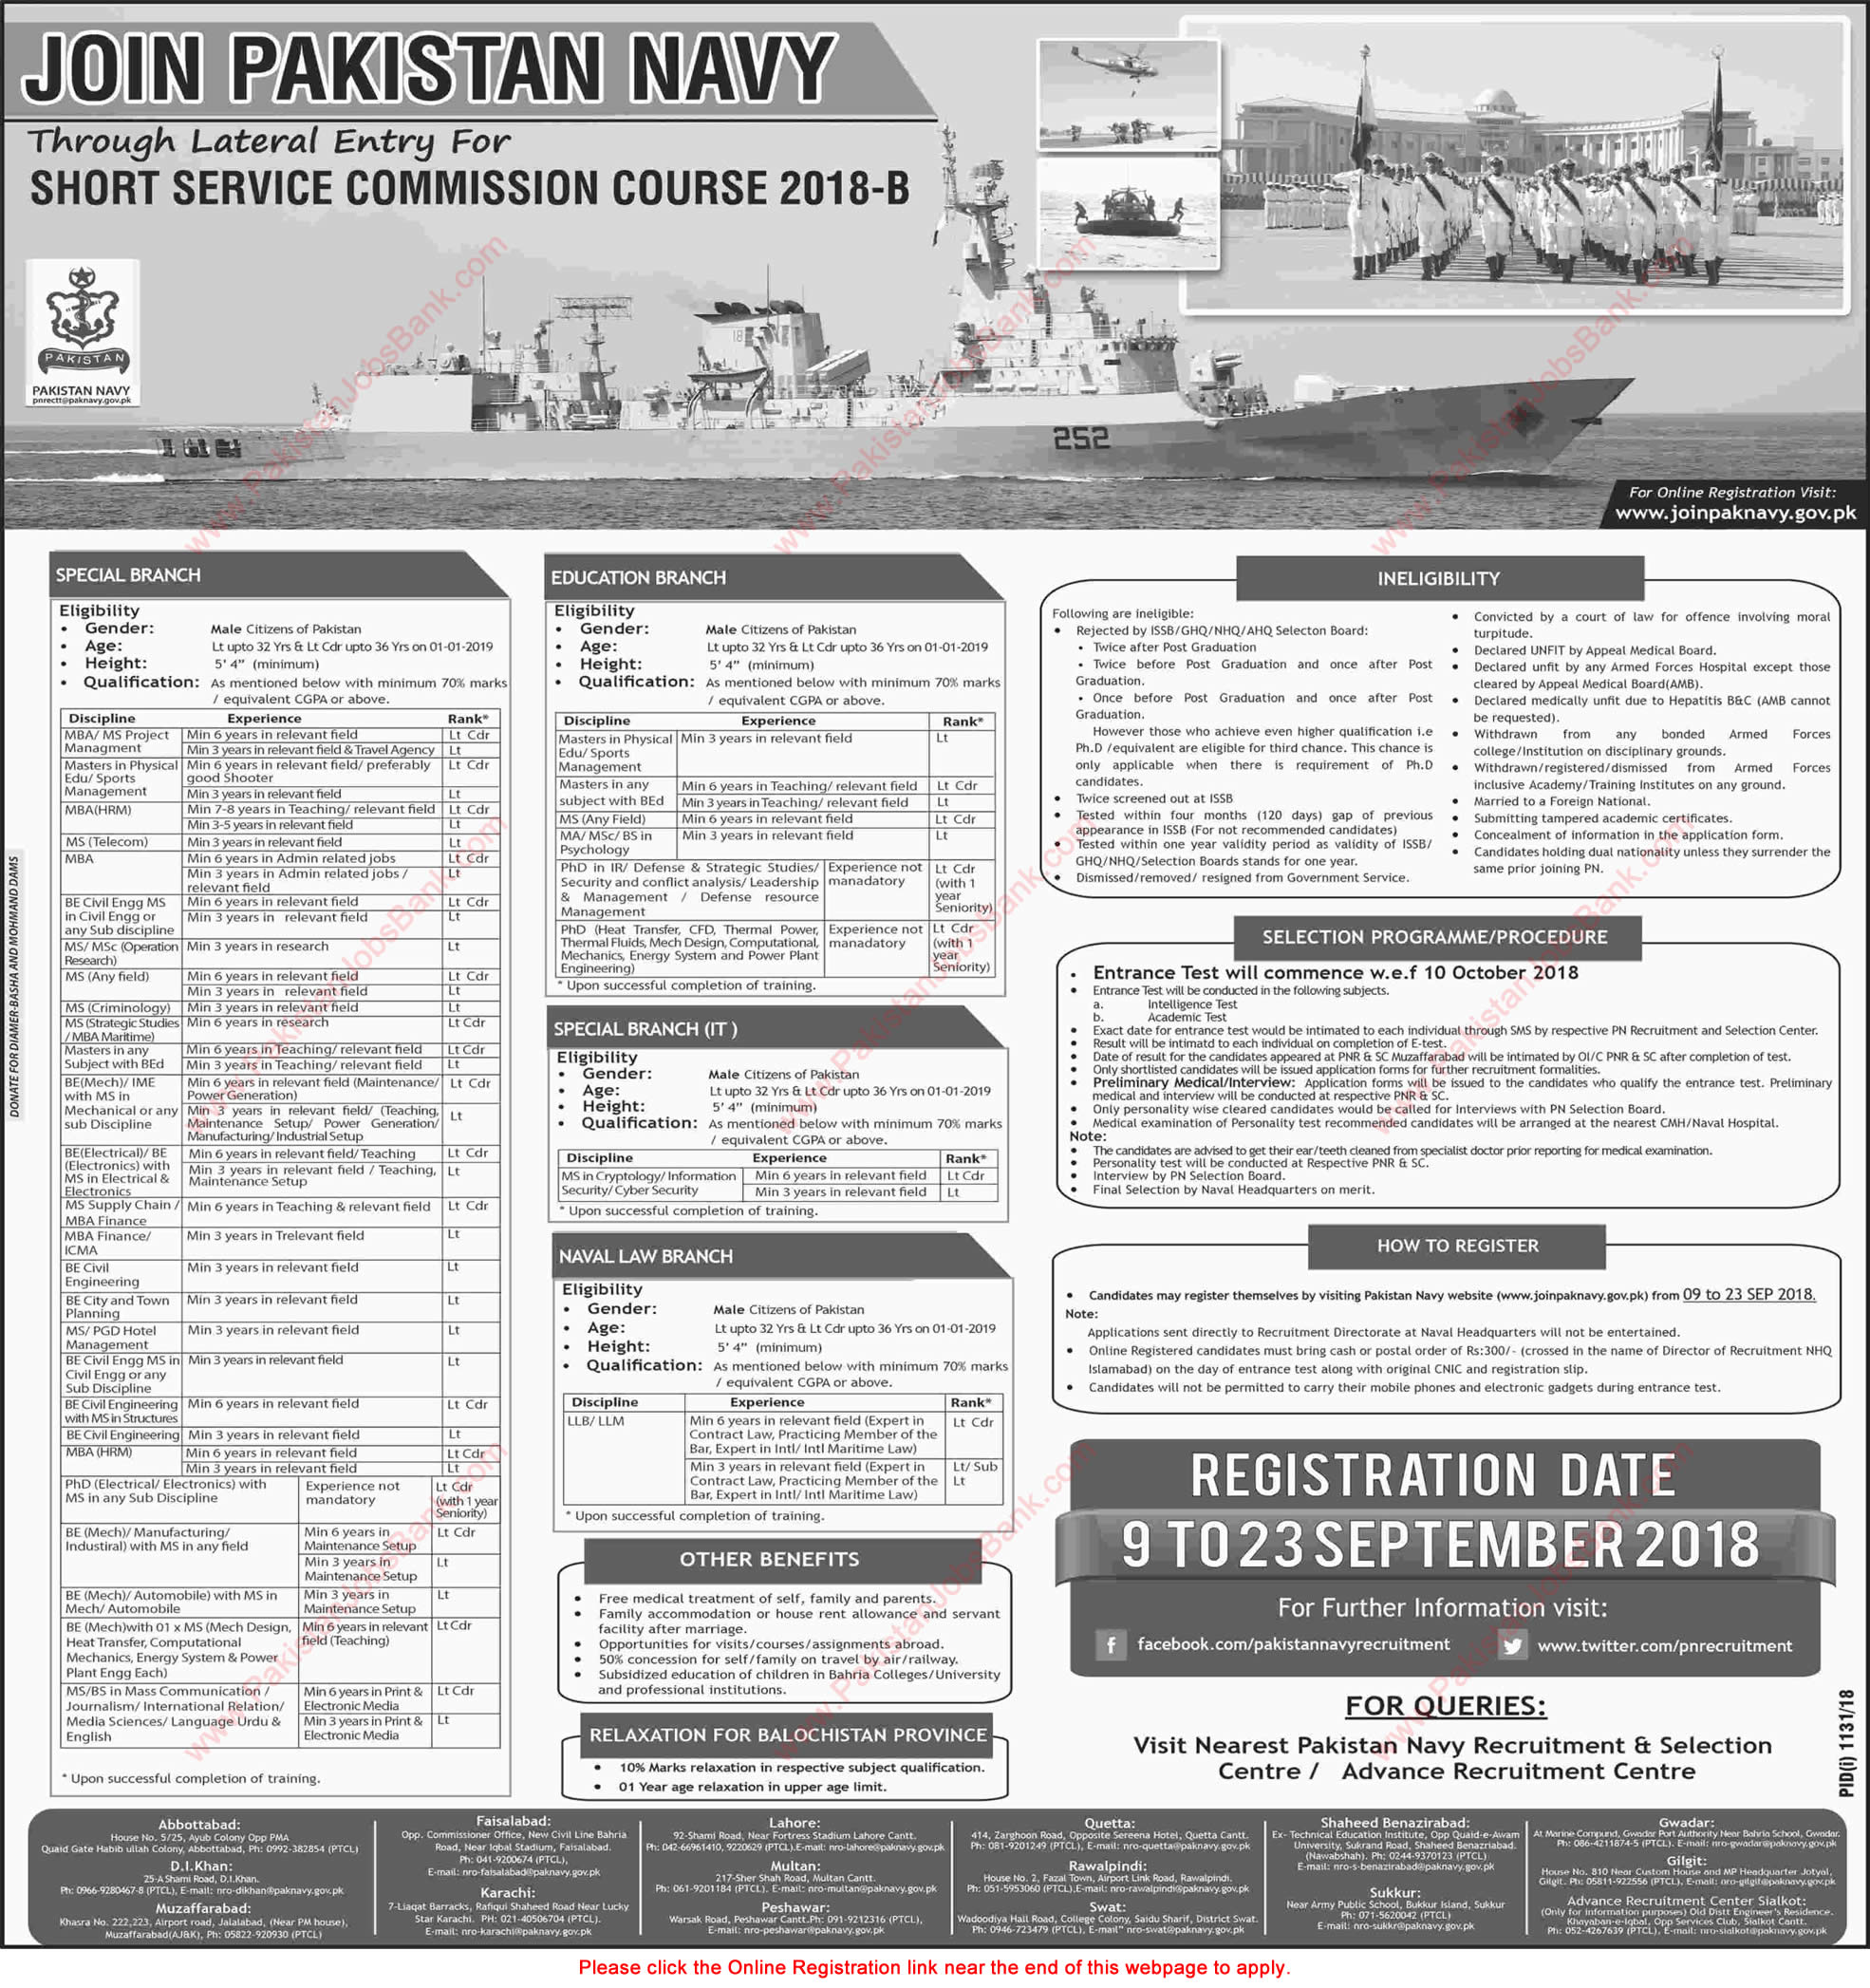 Join Pakistan Navy through Short Service Commission Course 2018-B Online Registration Latest